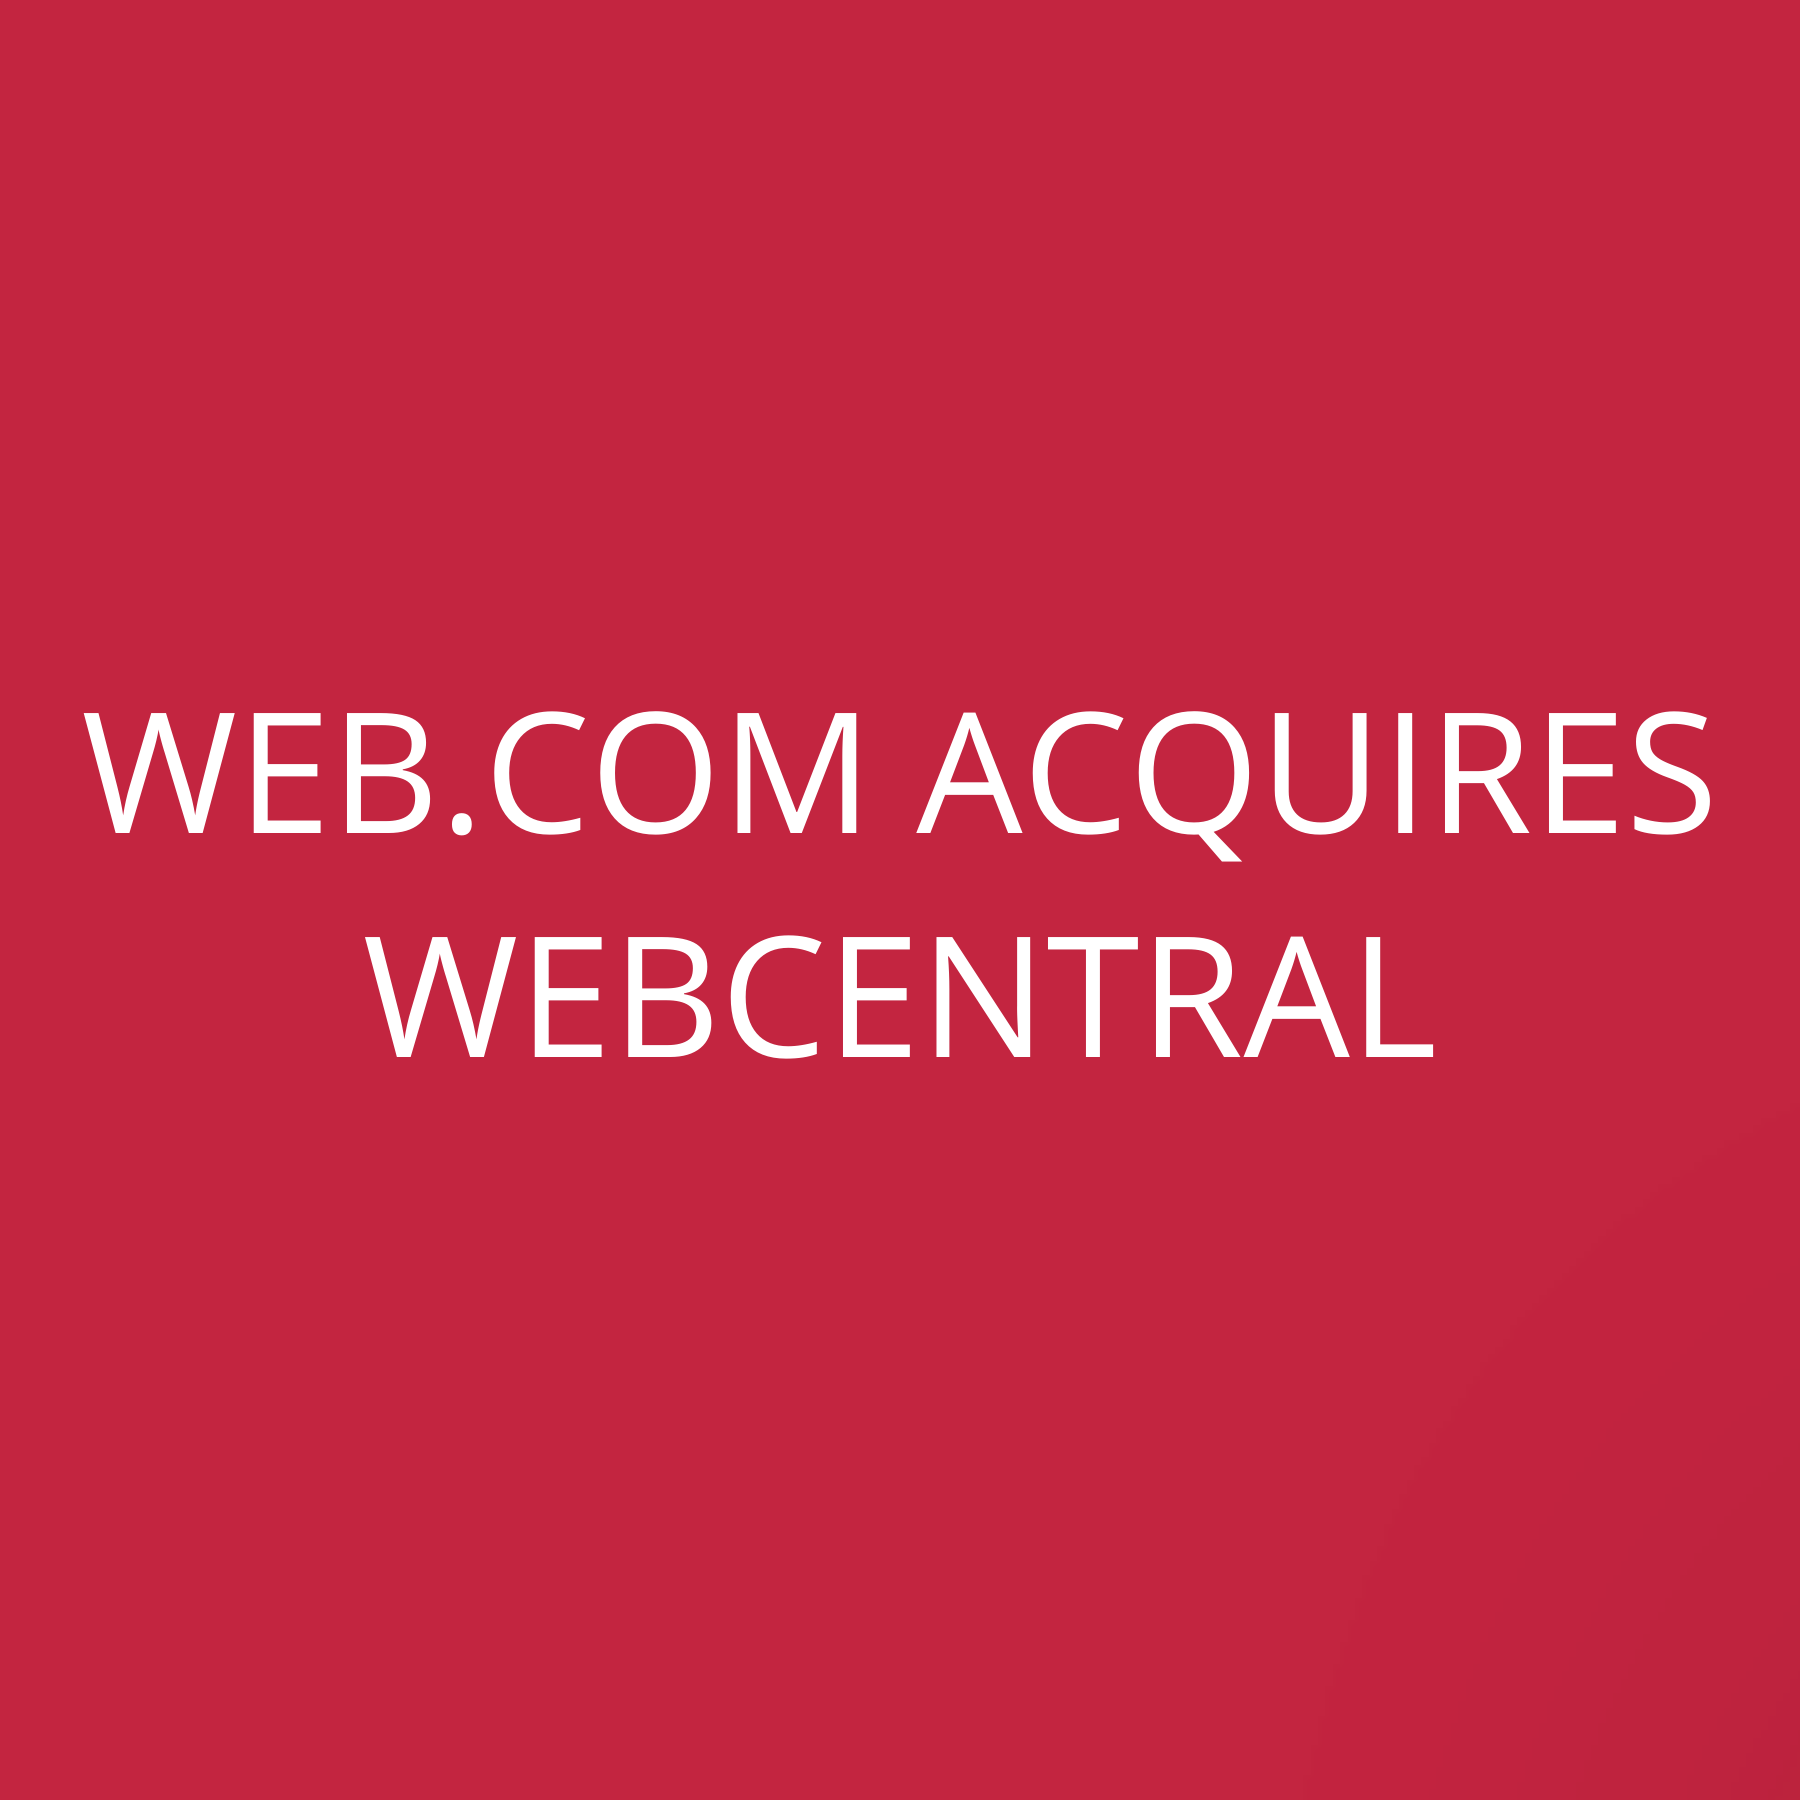 Web.com acquires Webcentral